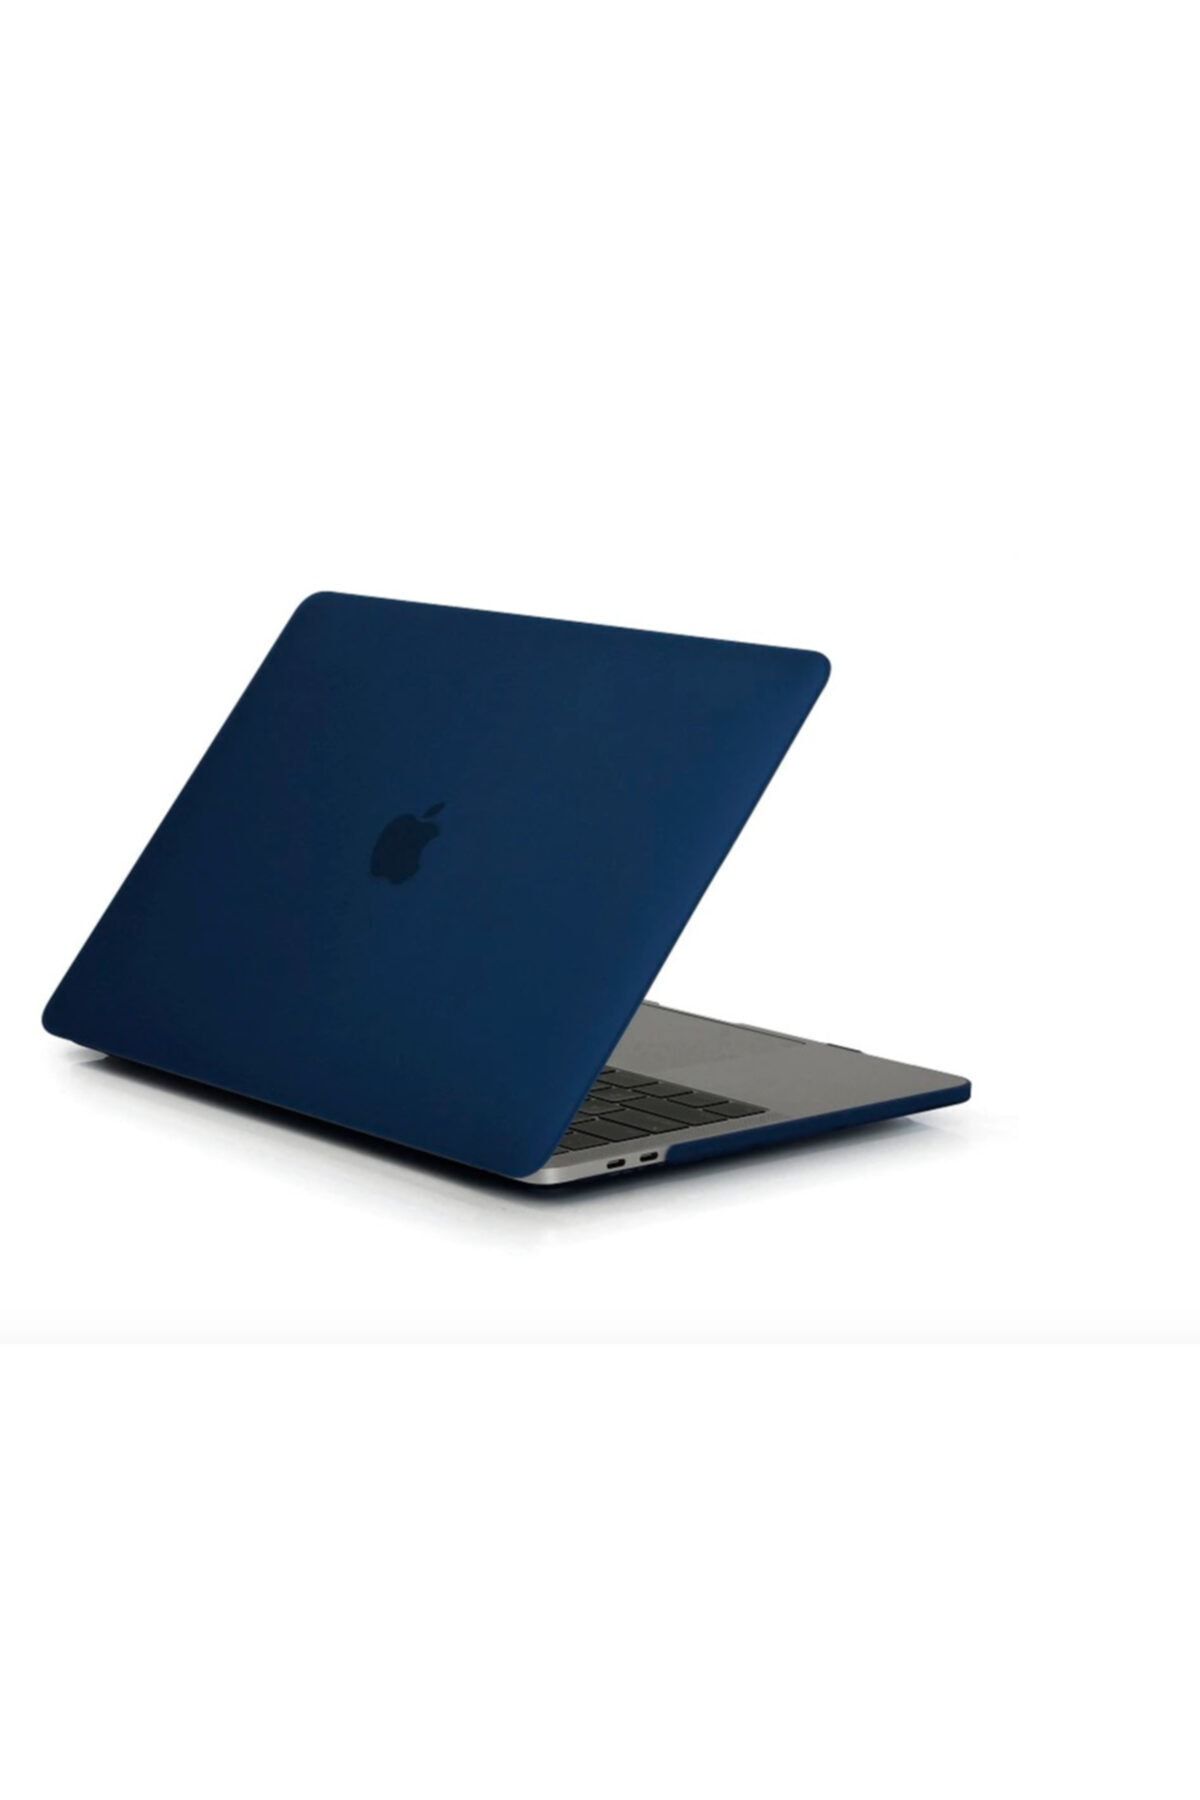 KIZILKAYA Macbook Pro 2020 A2338 M1 Lacivert Işlemci 13 Inç Touch Bar Sert Kapak Koruma Kılıf